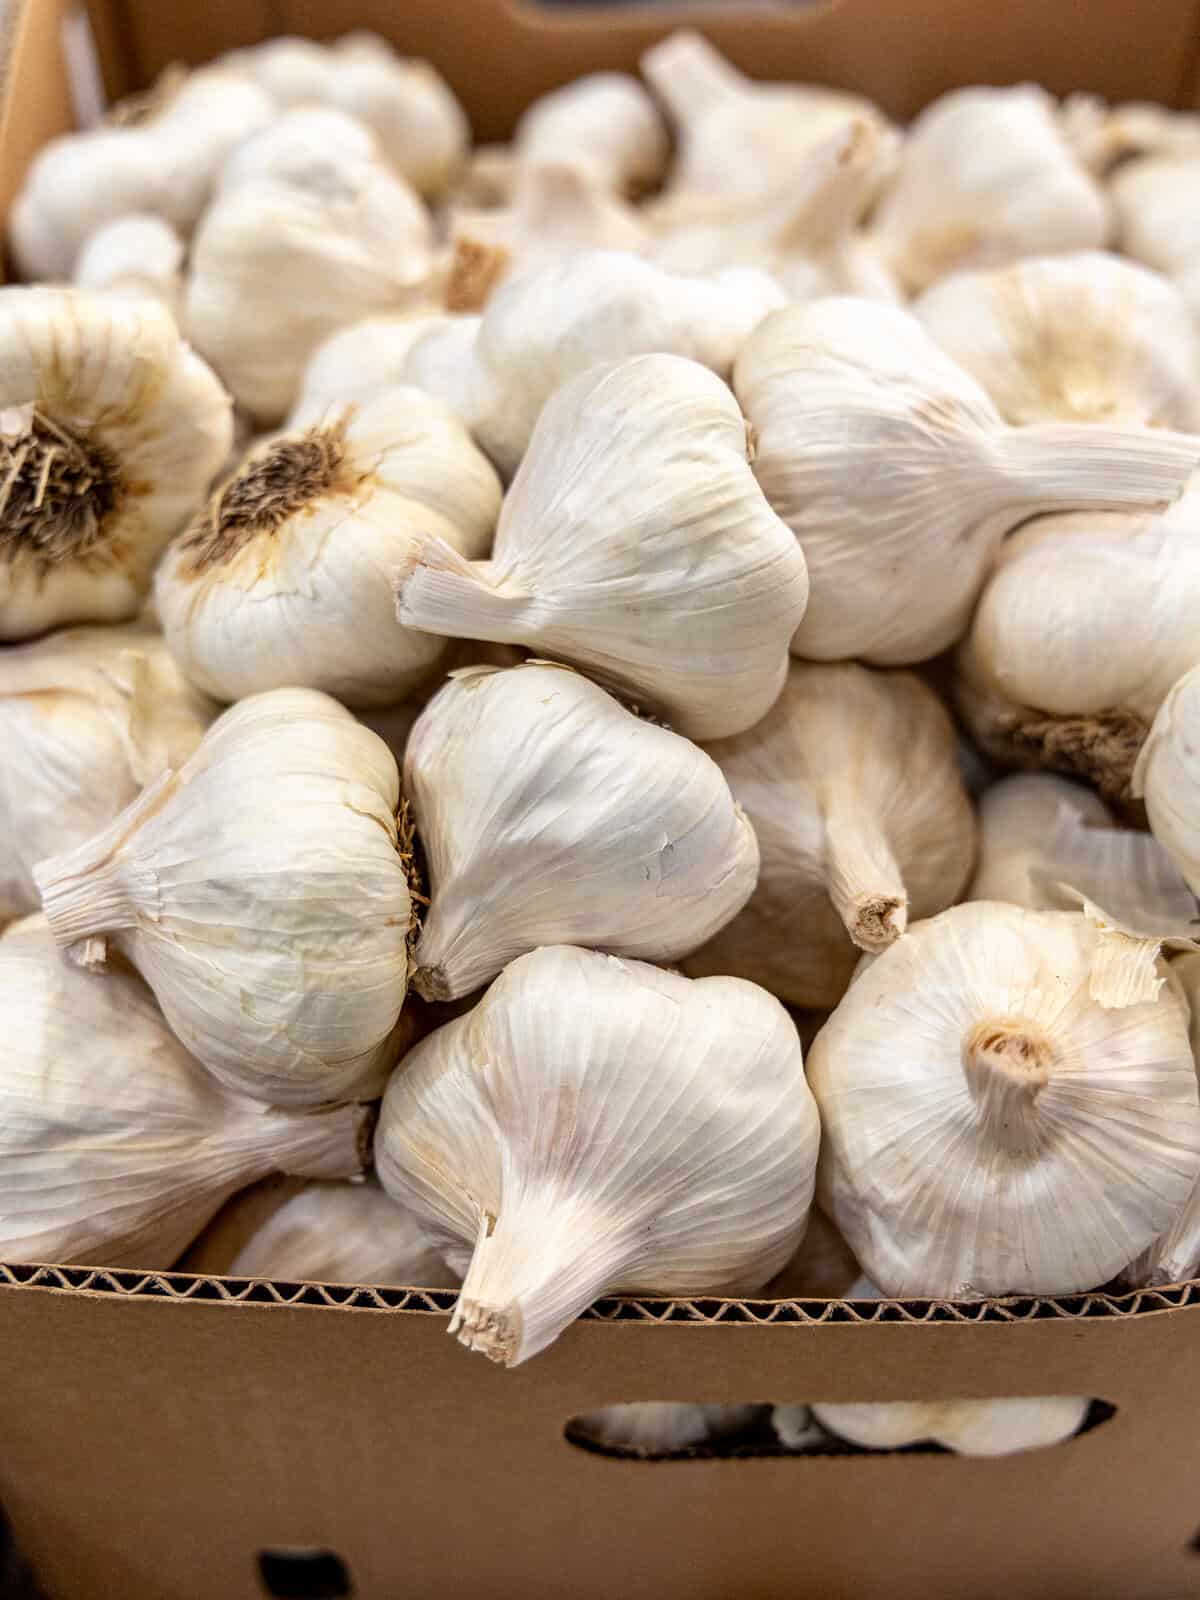 How is Garlic Grown in California?